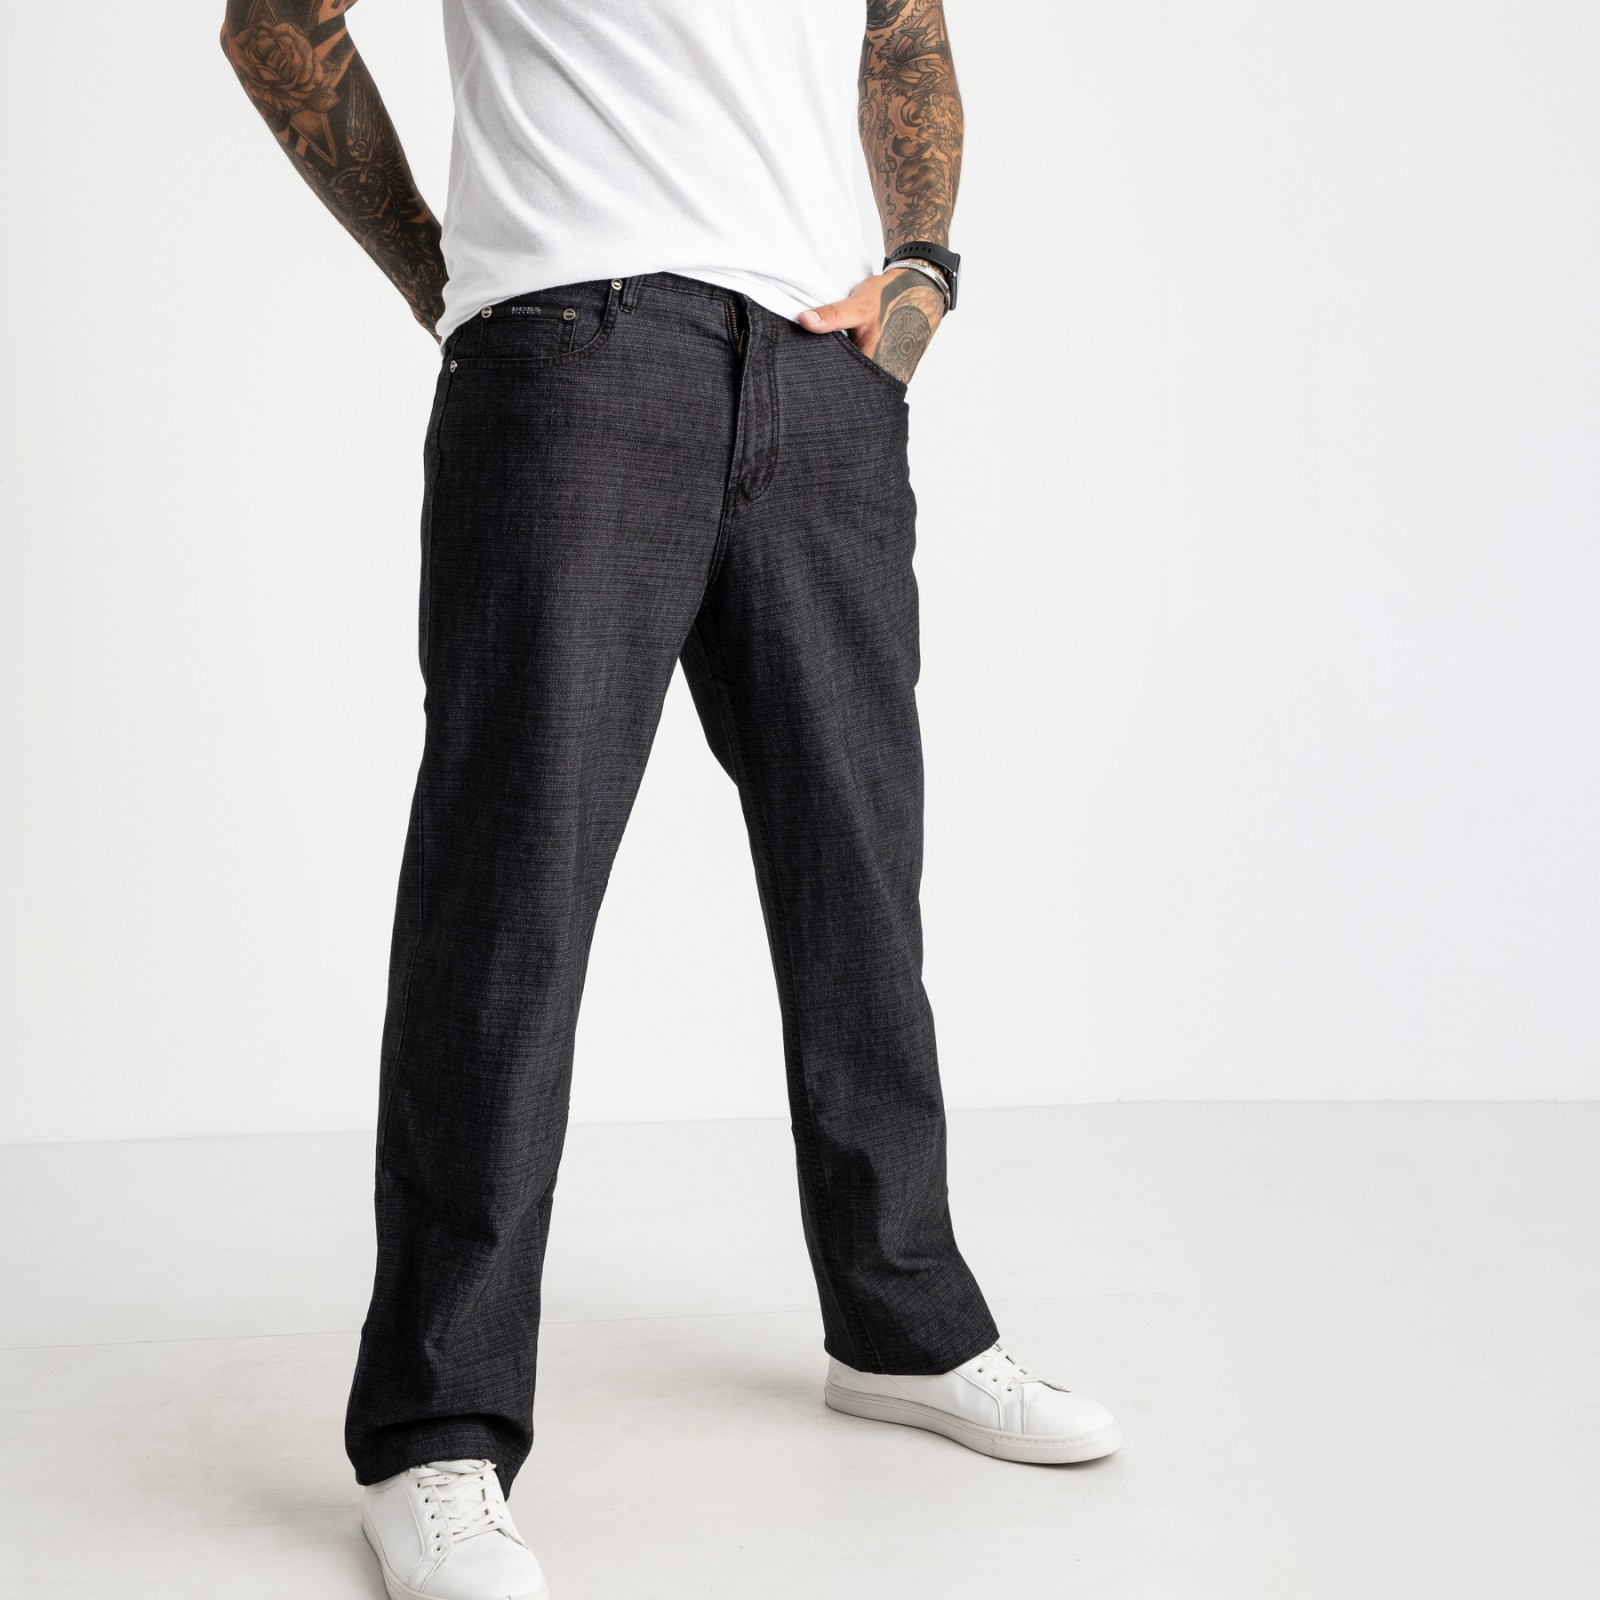 0182-1 Hugo Boss джинсы мужские серые стрейчевые (6 ед.размеры: 30.31.32.33.34.36)